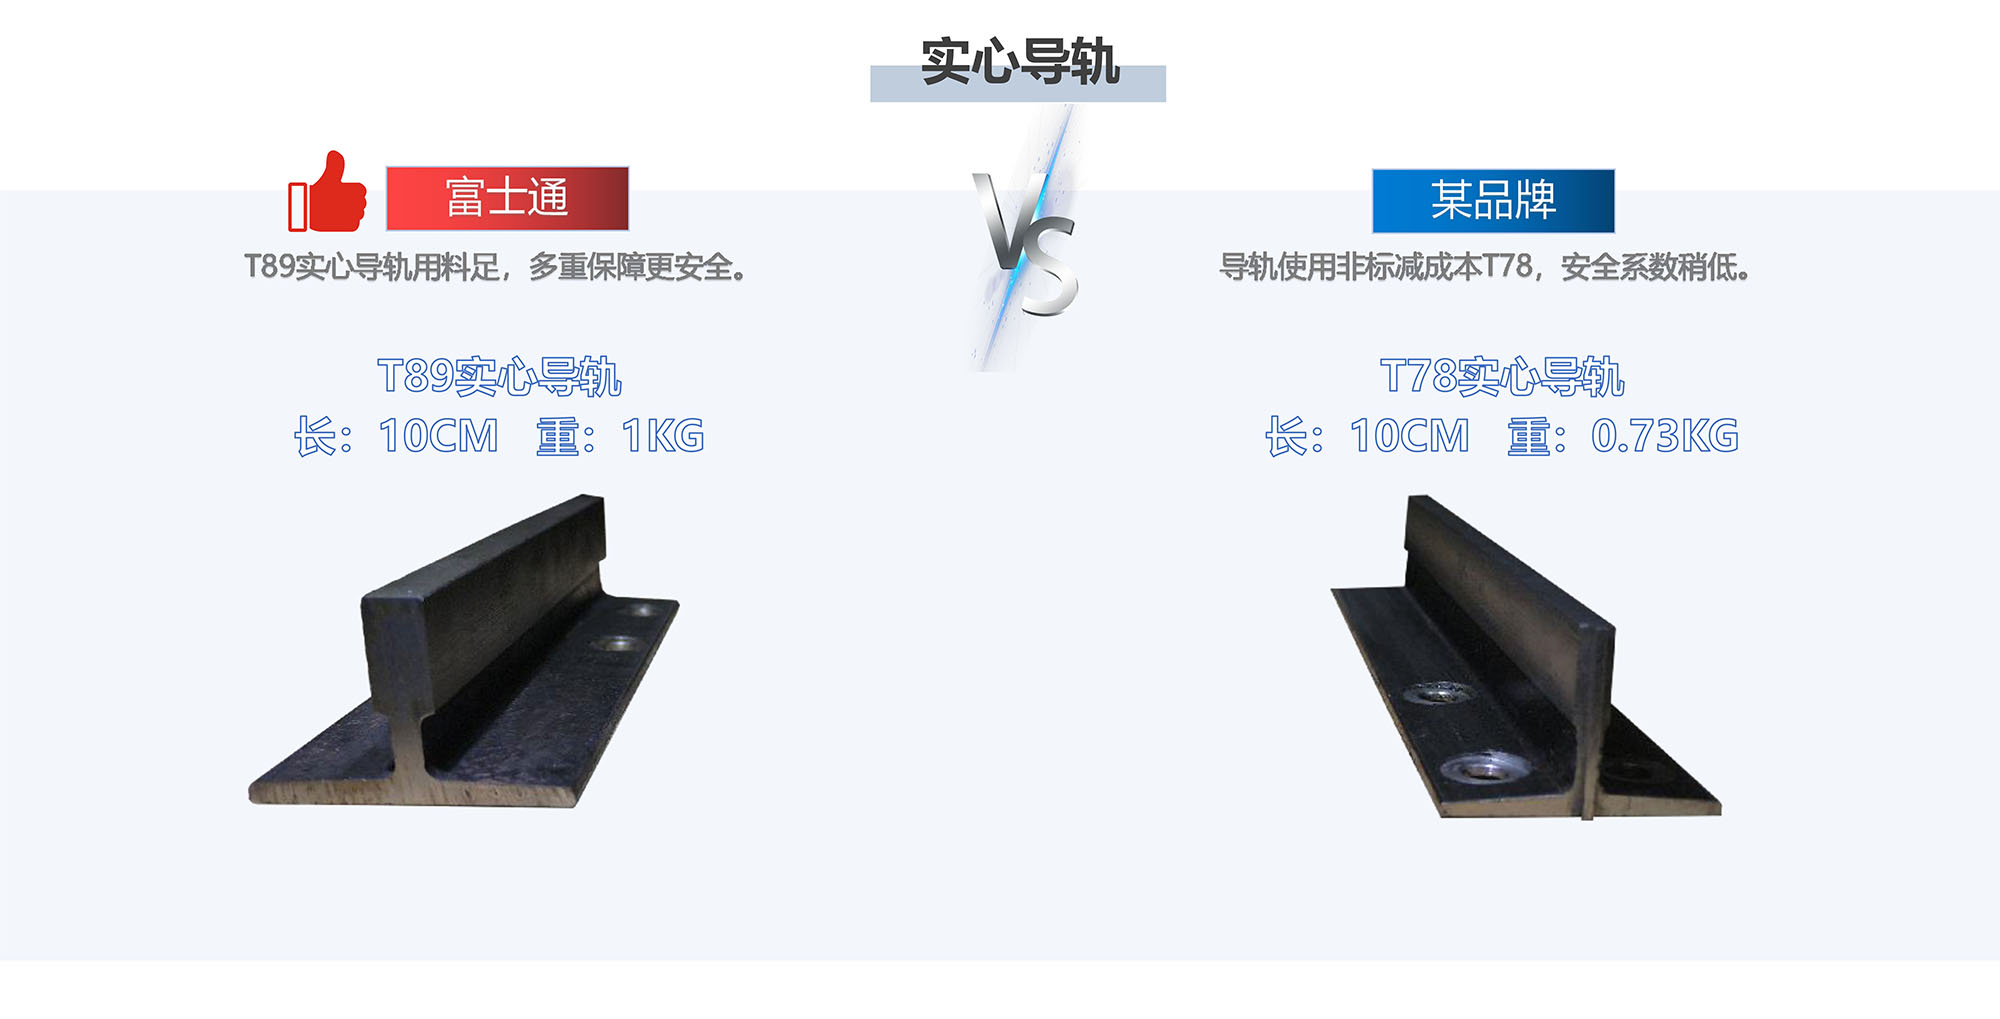 mg4355检测路线app(中国)官方网站